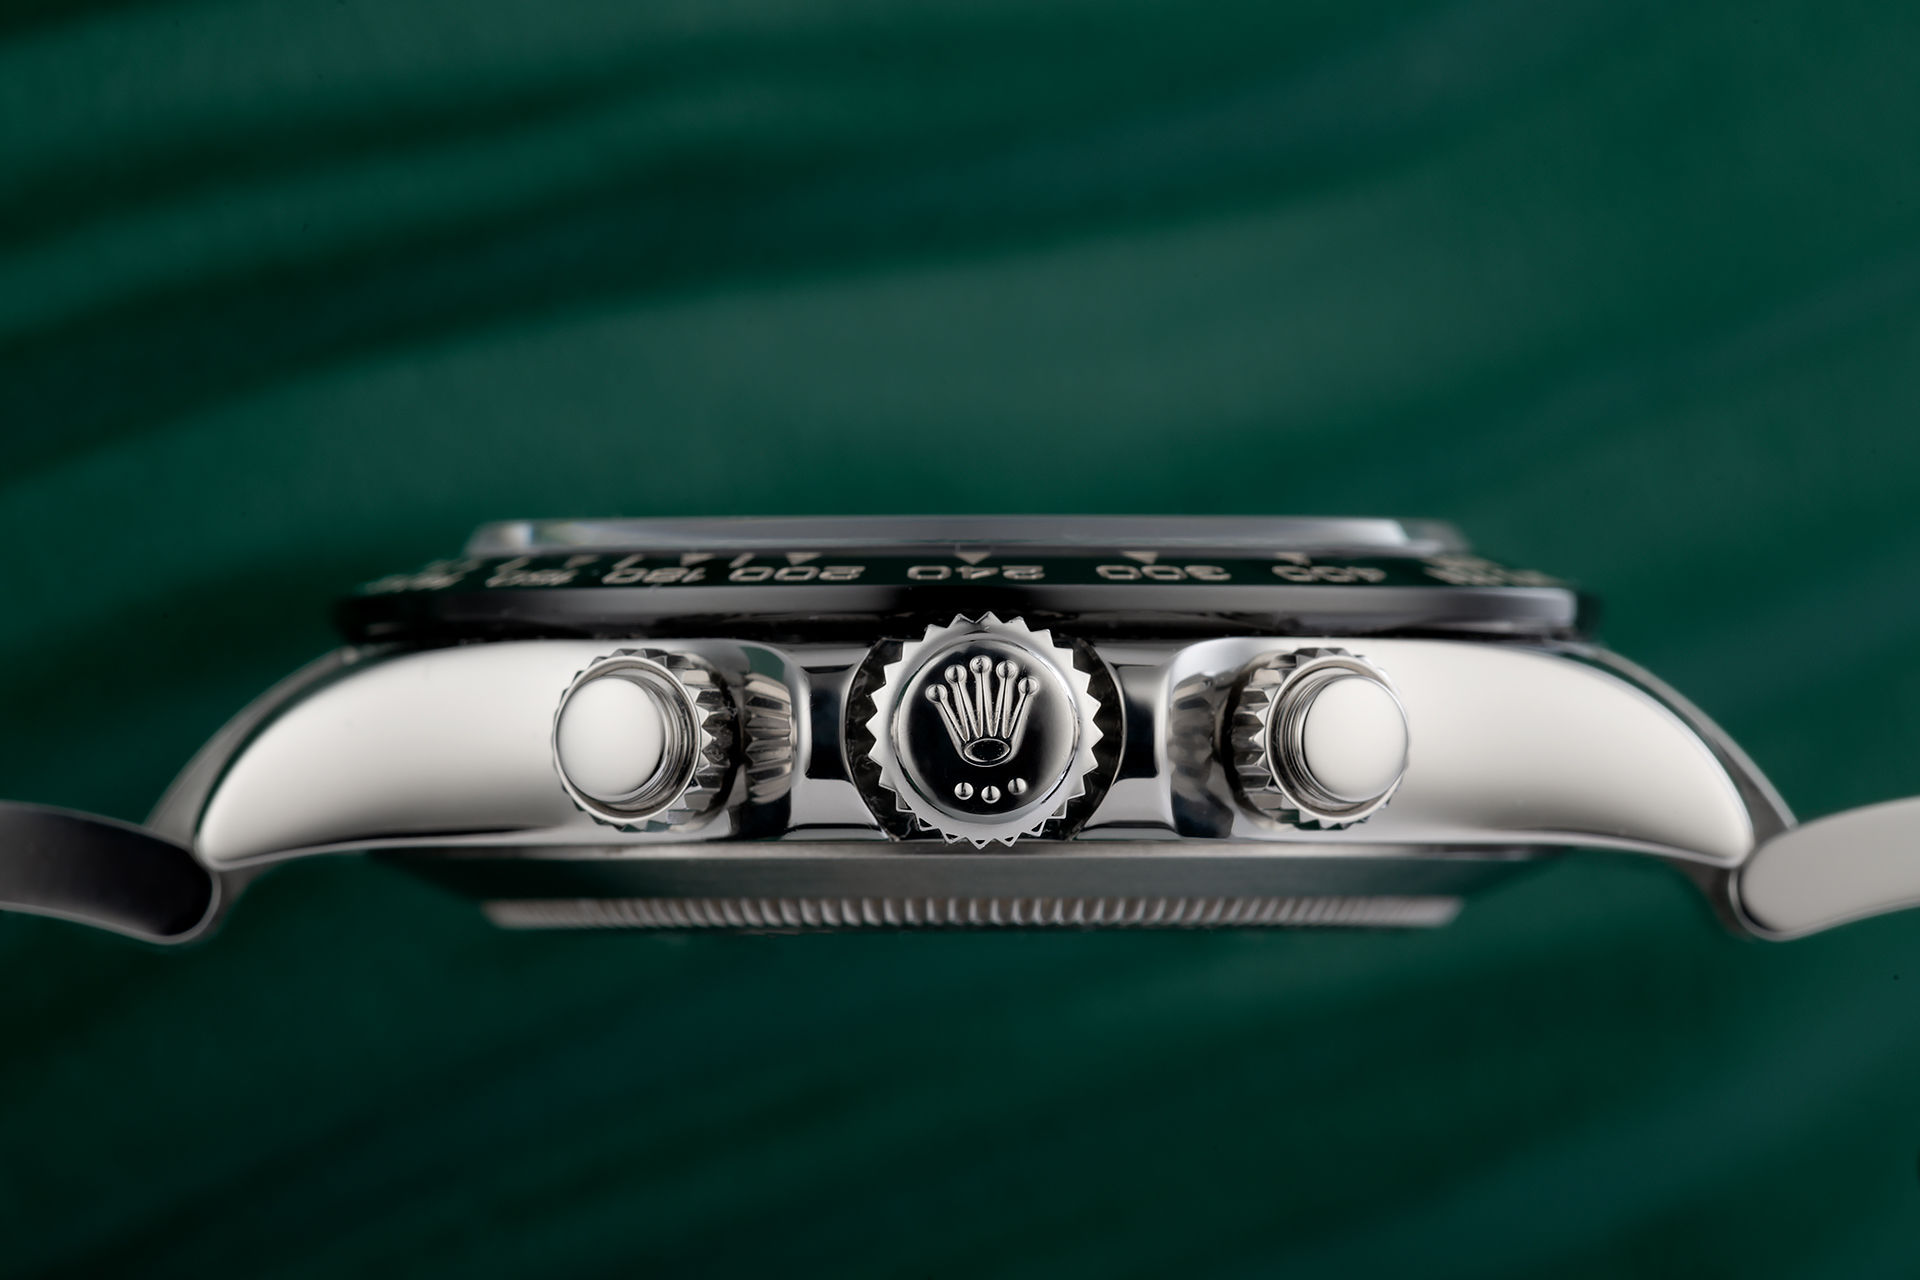 ref 116500LN | 'Cerachrom' 5 Year Warranty | Rolex Cosmograph Daytona